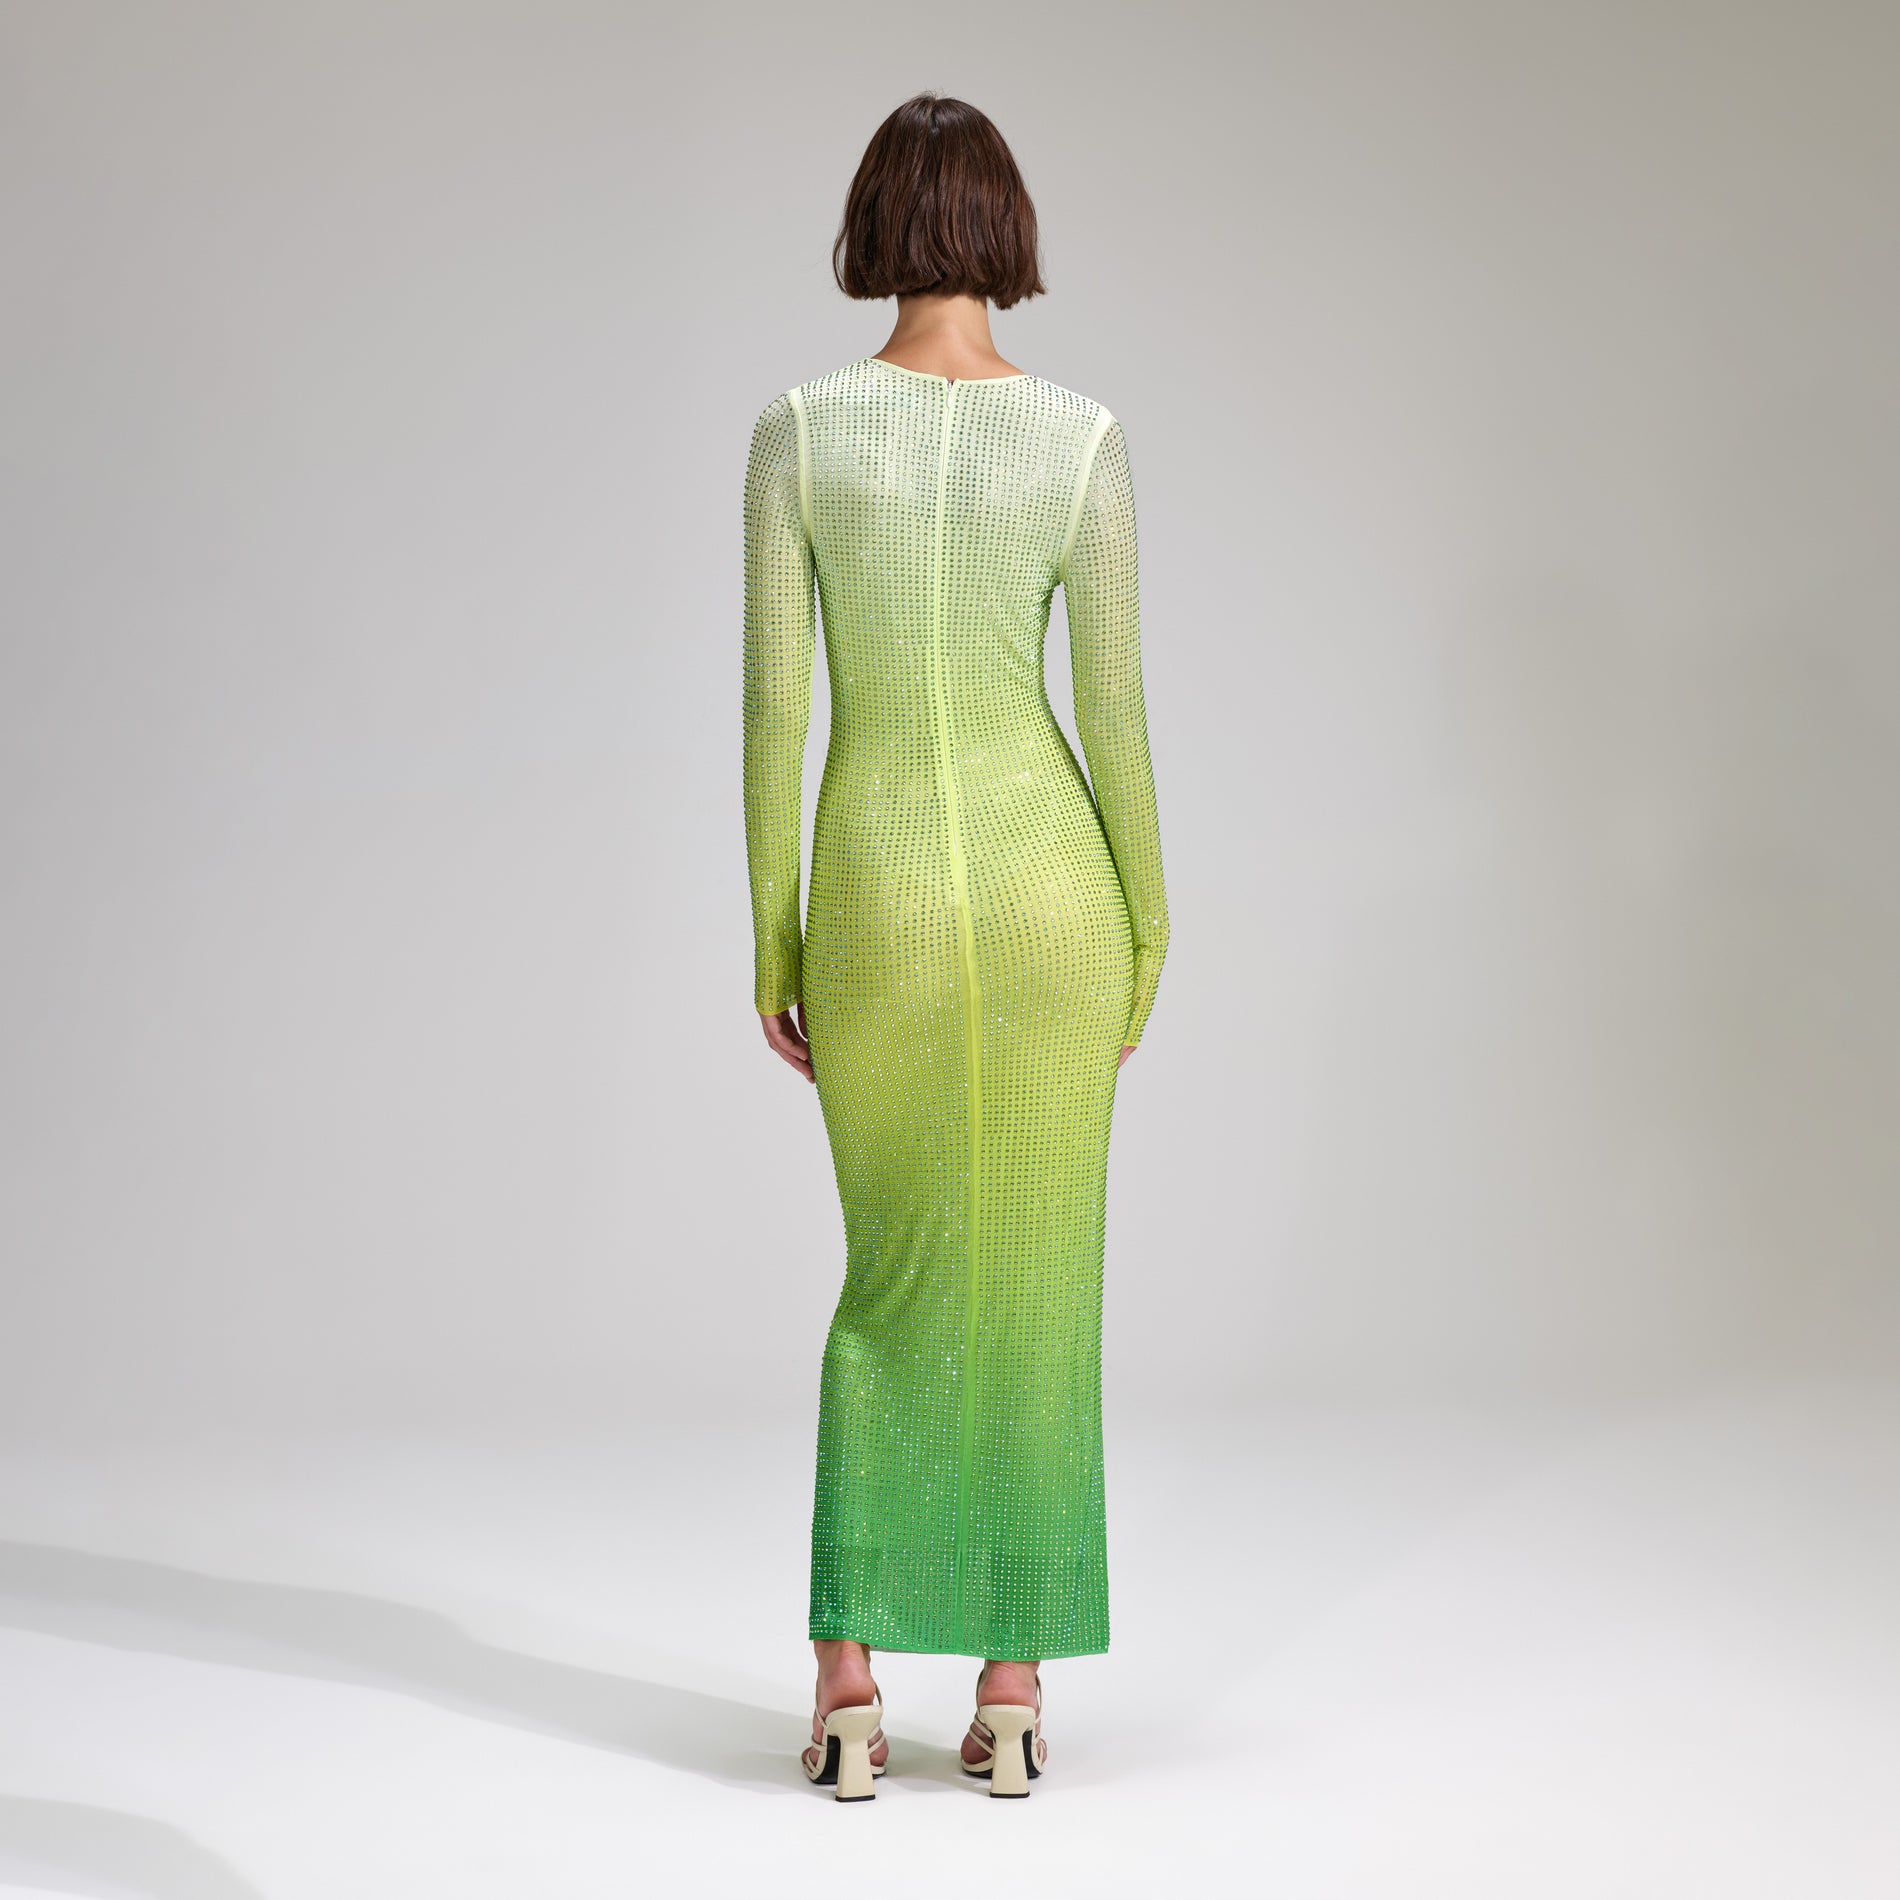 A woman wearing the Green Rhinestone Mesh Keyhole Maxi Dress